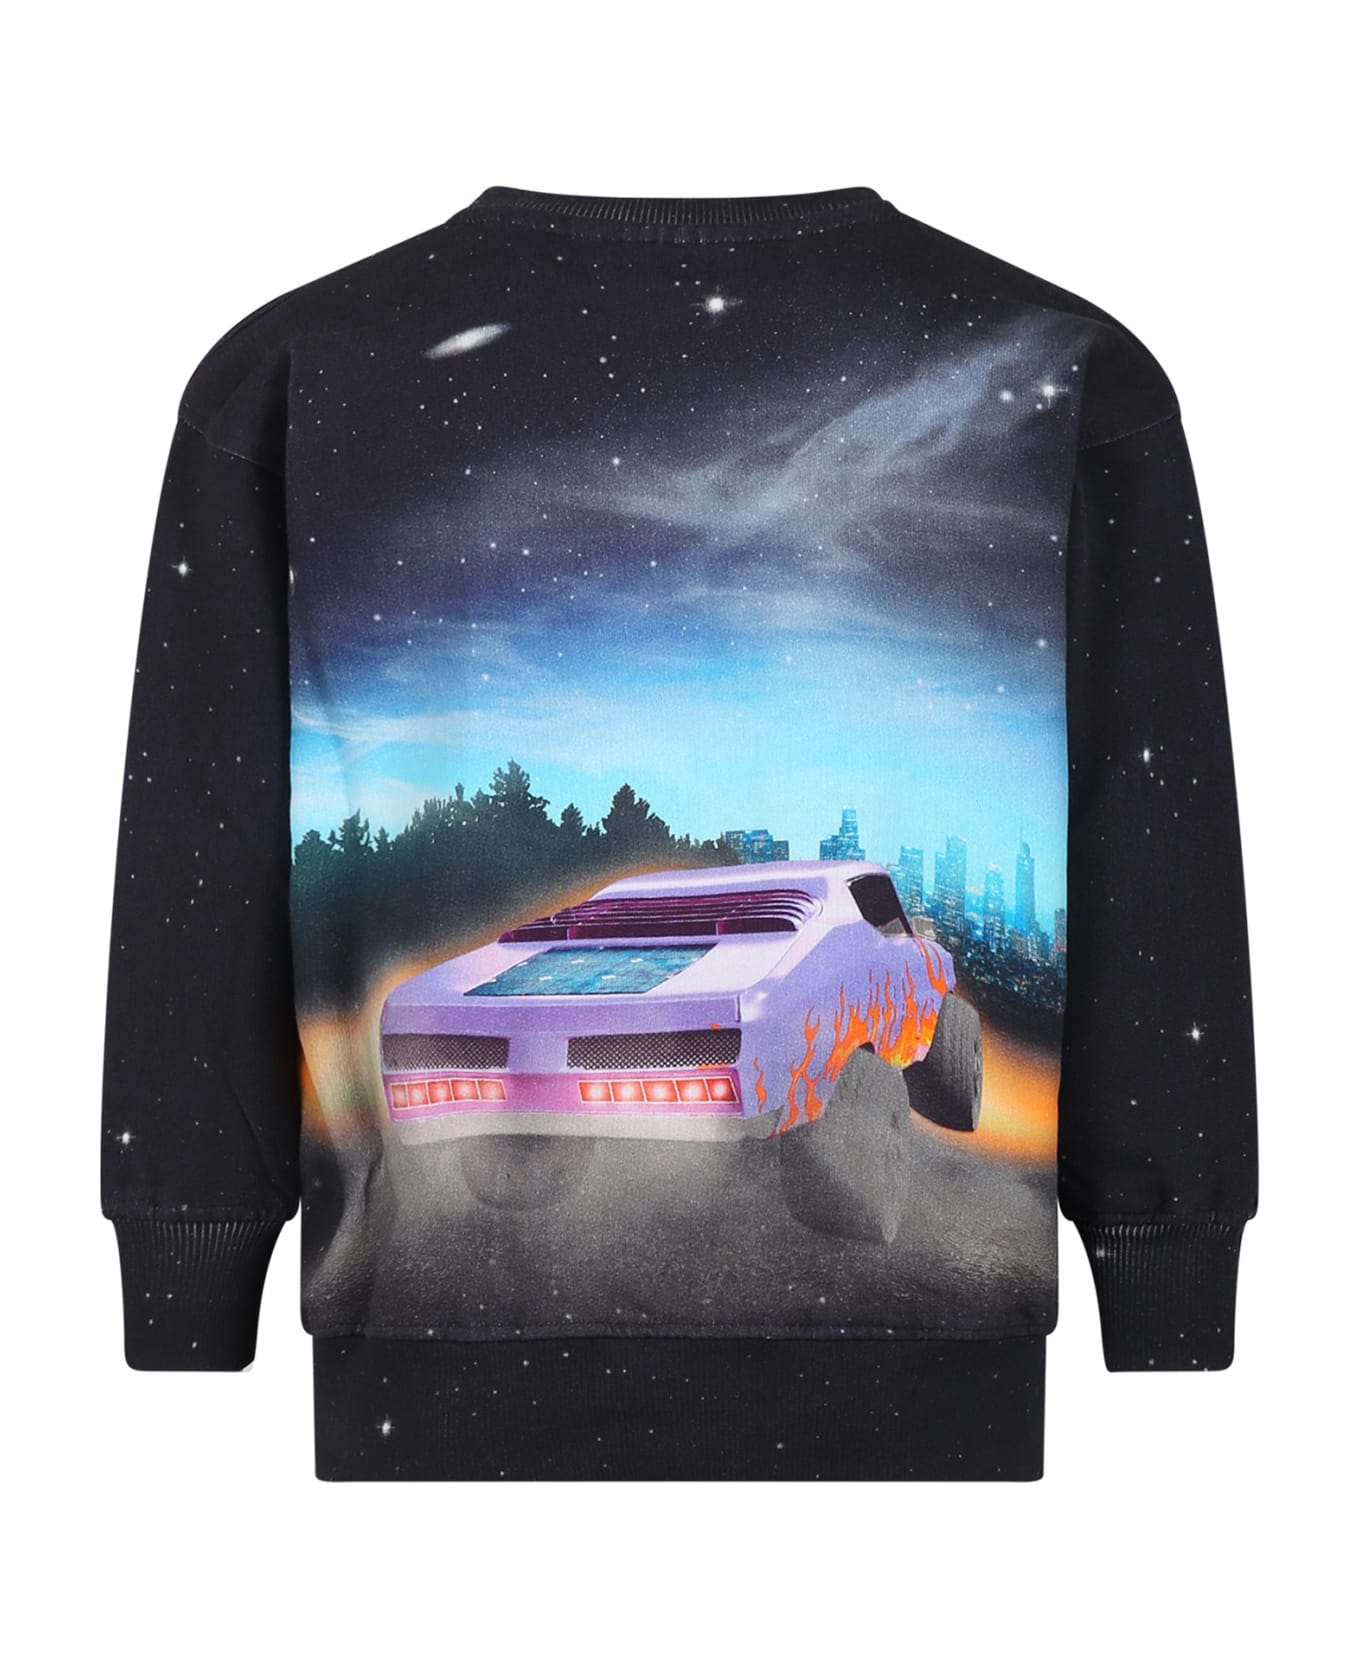 Molo Black Sweatshirt For Boy With Car Print - Black